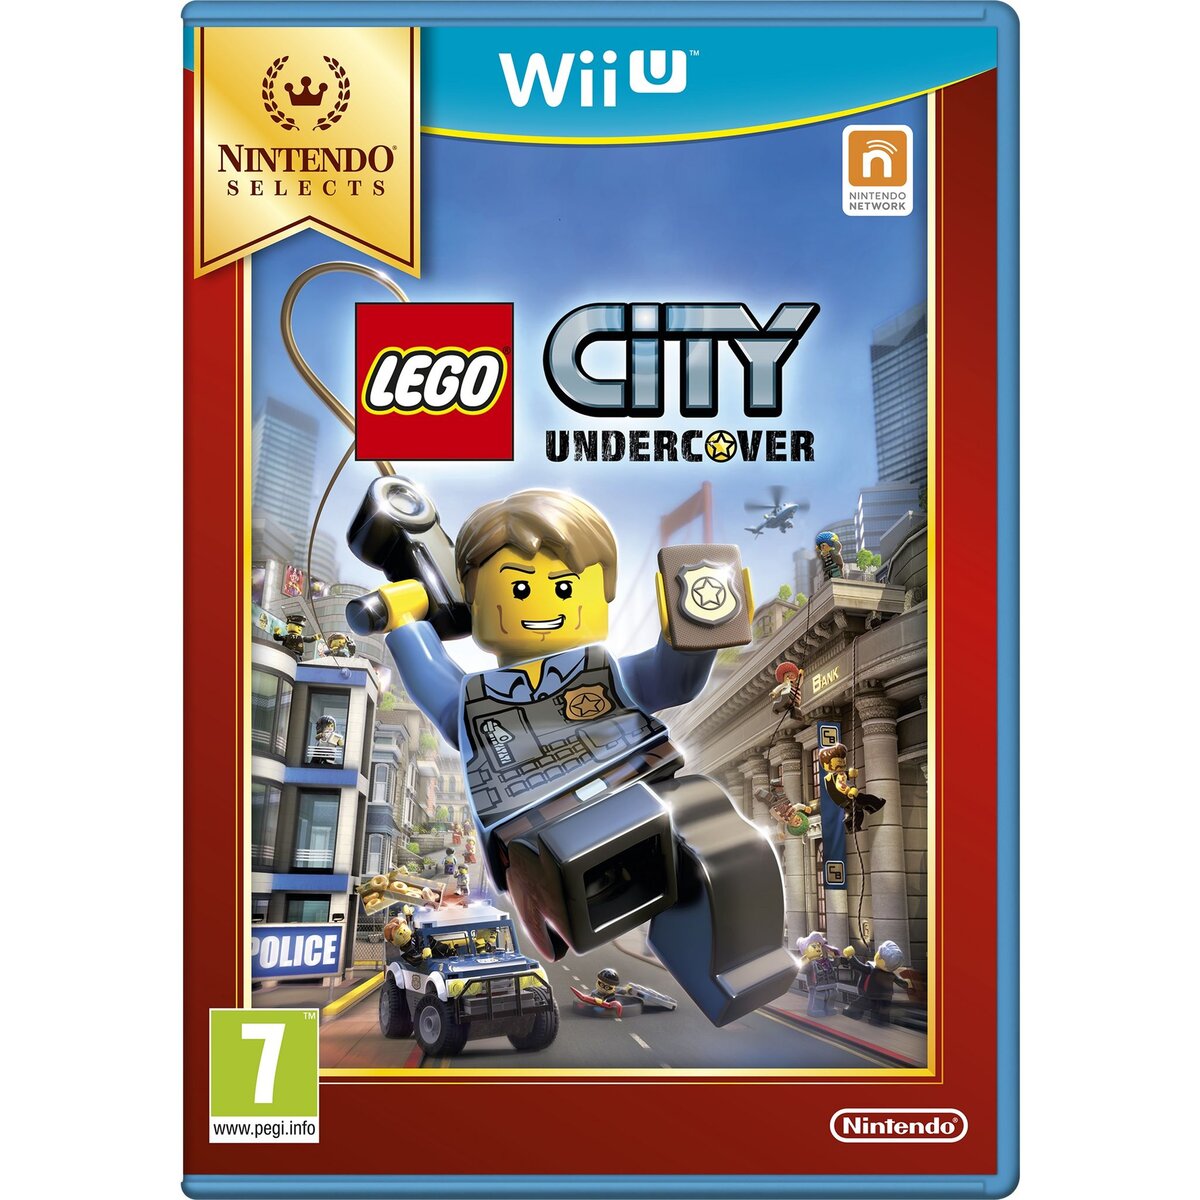 Lego City Undercover Wii U